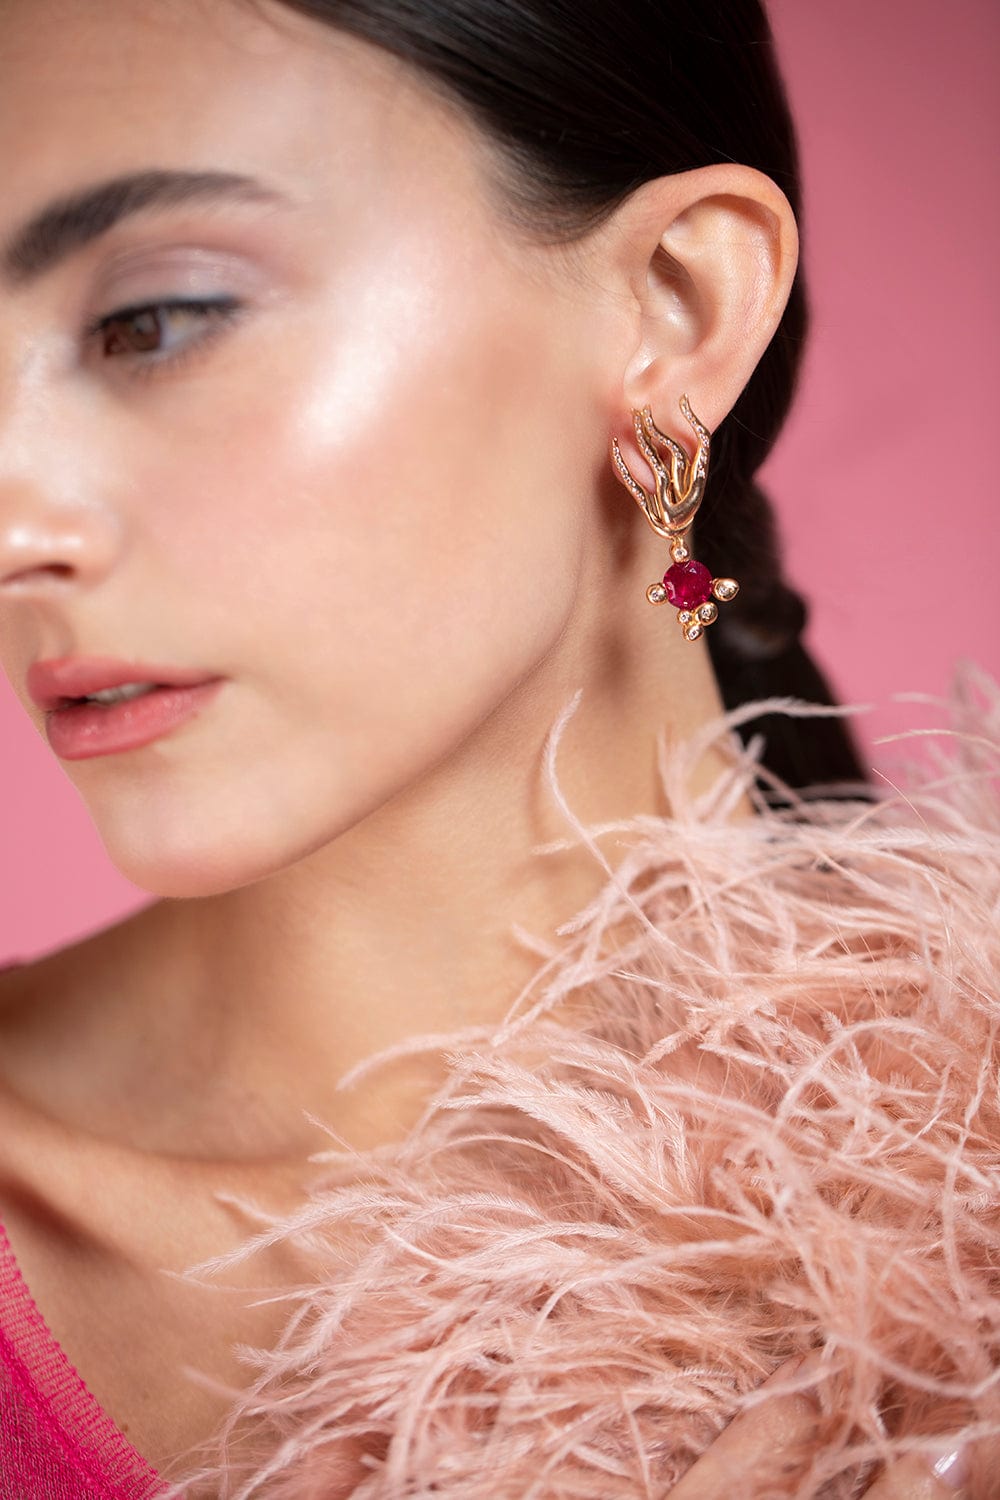 LUCIFER VIR HONESTUS-Red Tourmaline and Diamond Earrings-ROSE GOLD